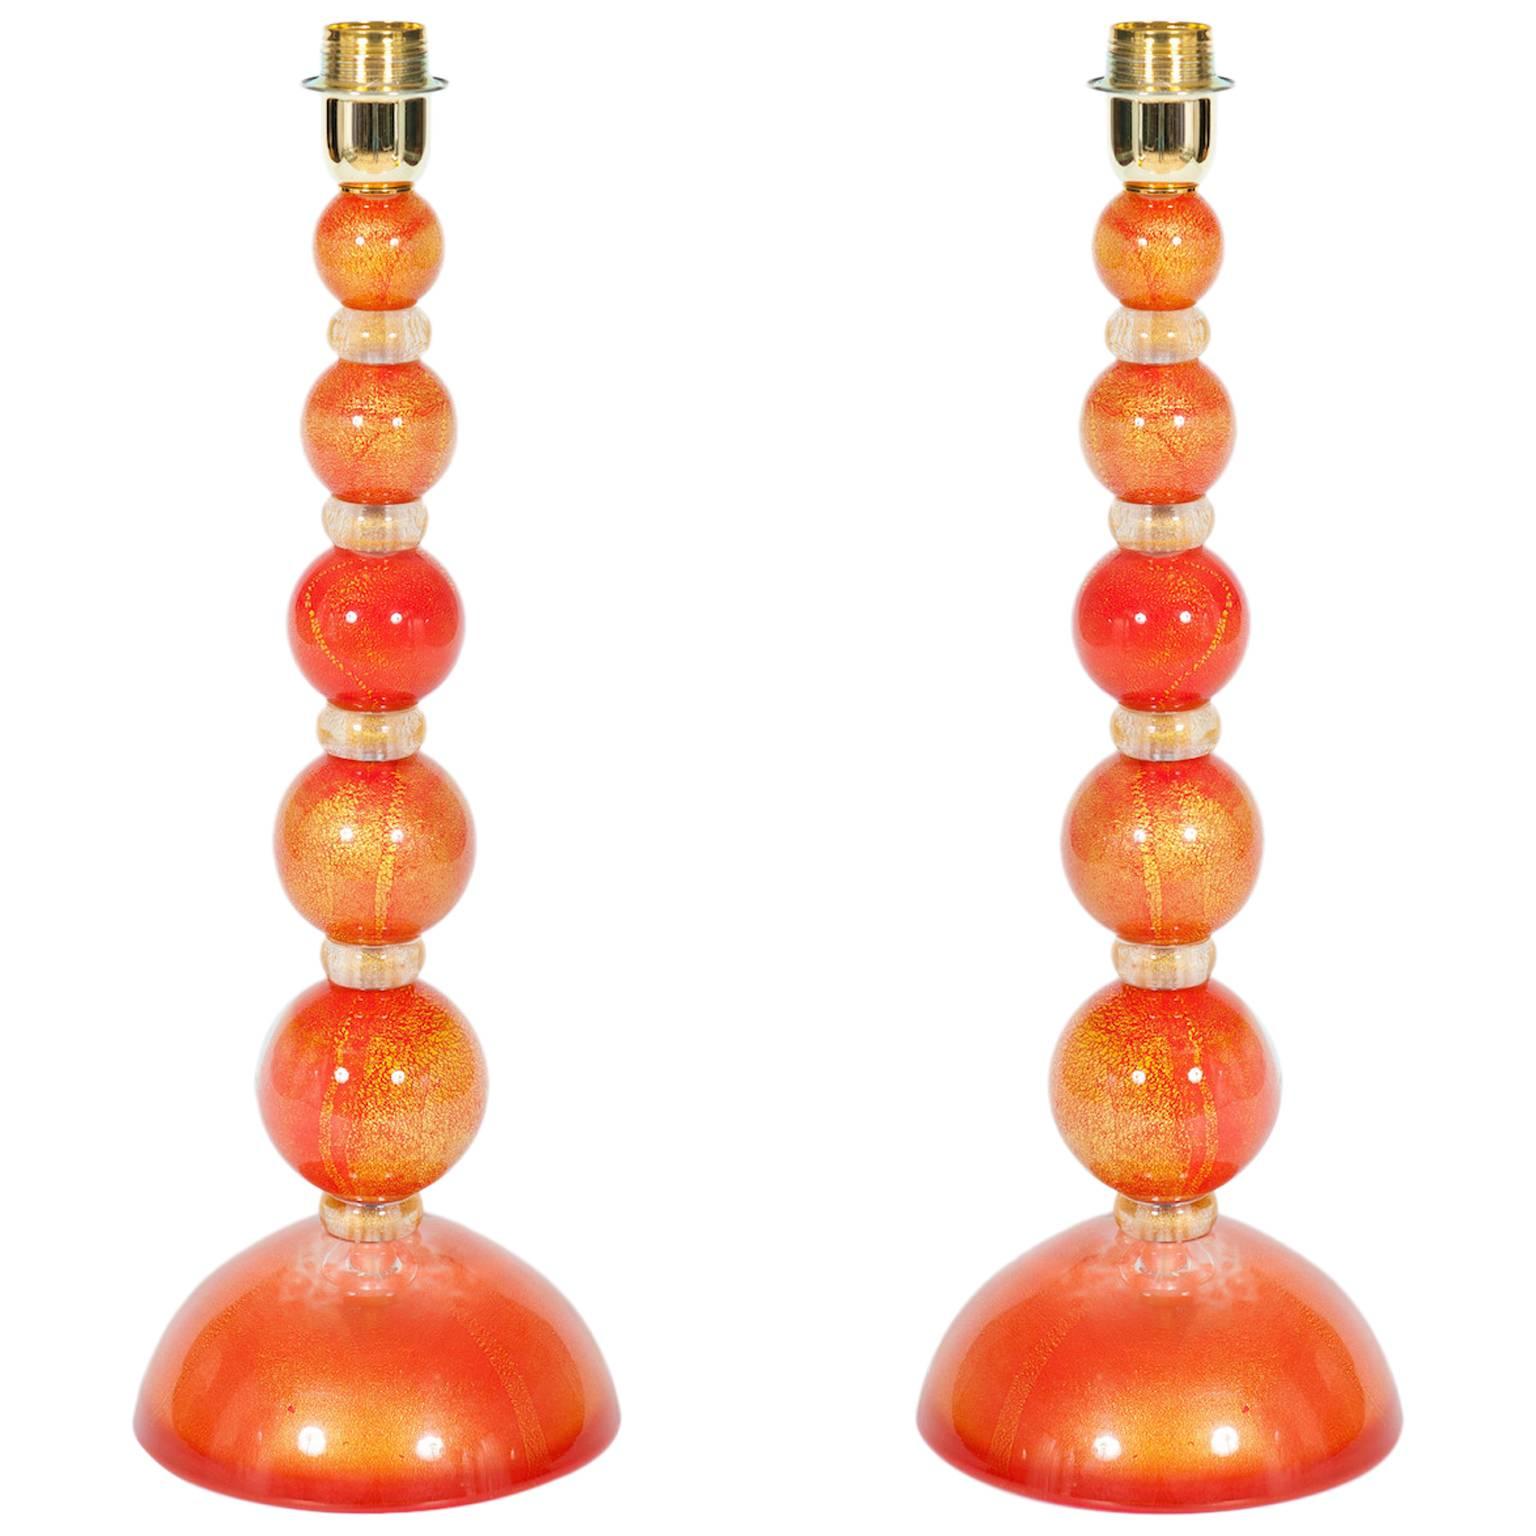 Pair of Italian Venetian Murano Glass Table Lamps in Gold and Orange